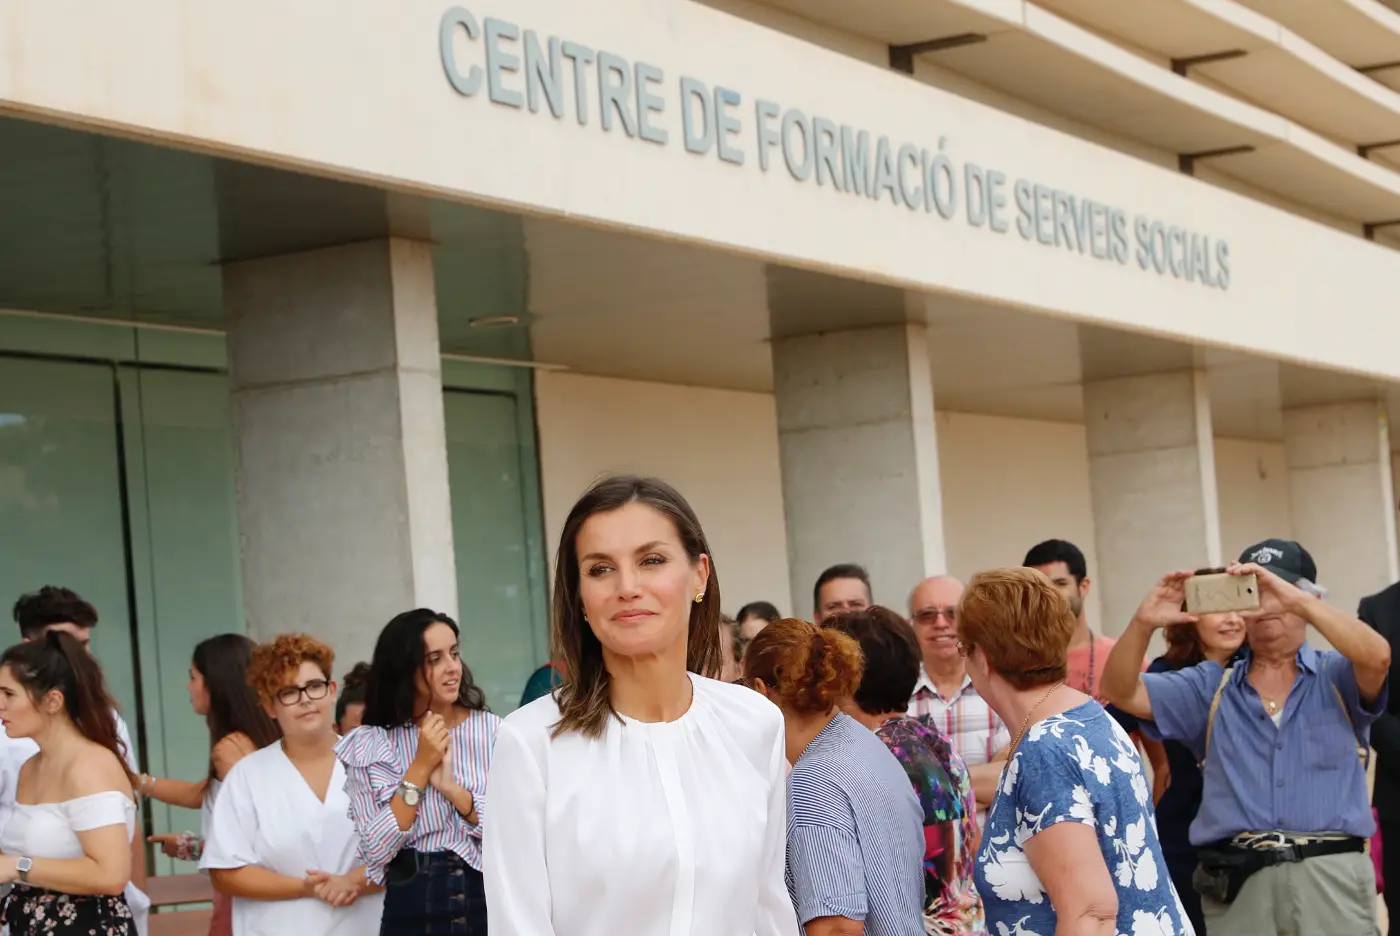 Queen Letizia opened the Professional Courses 2018-2019